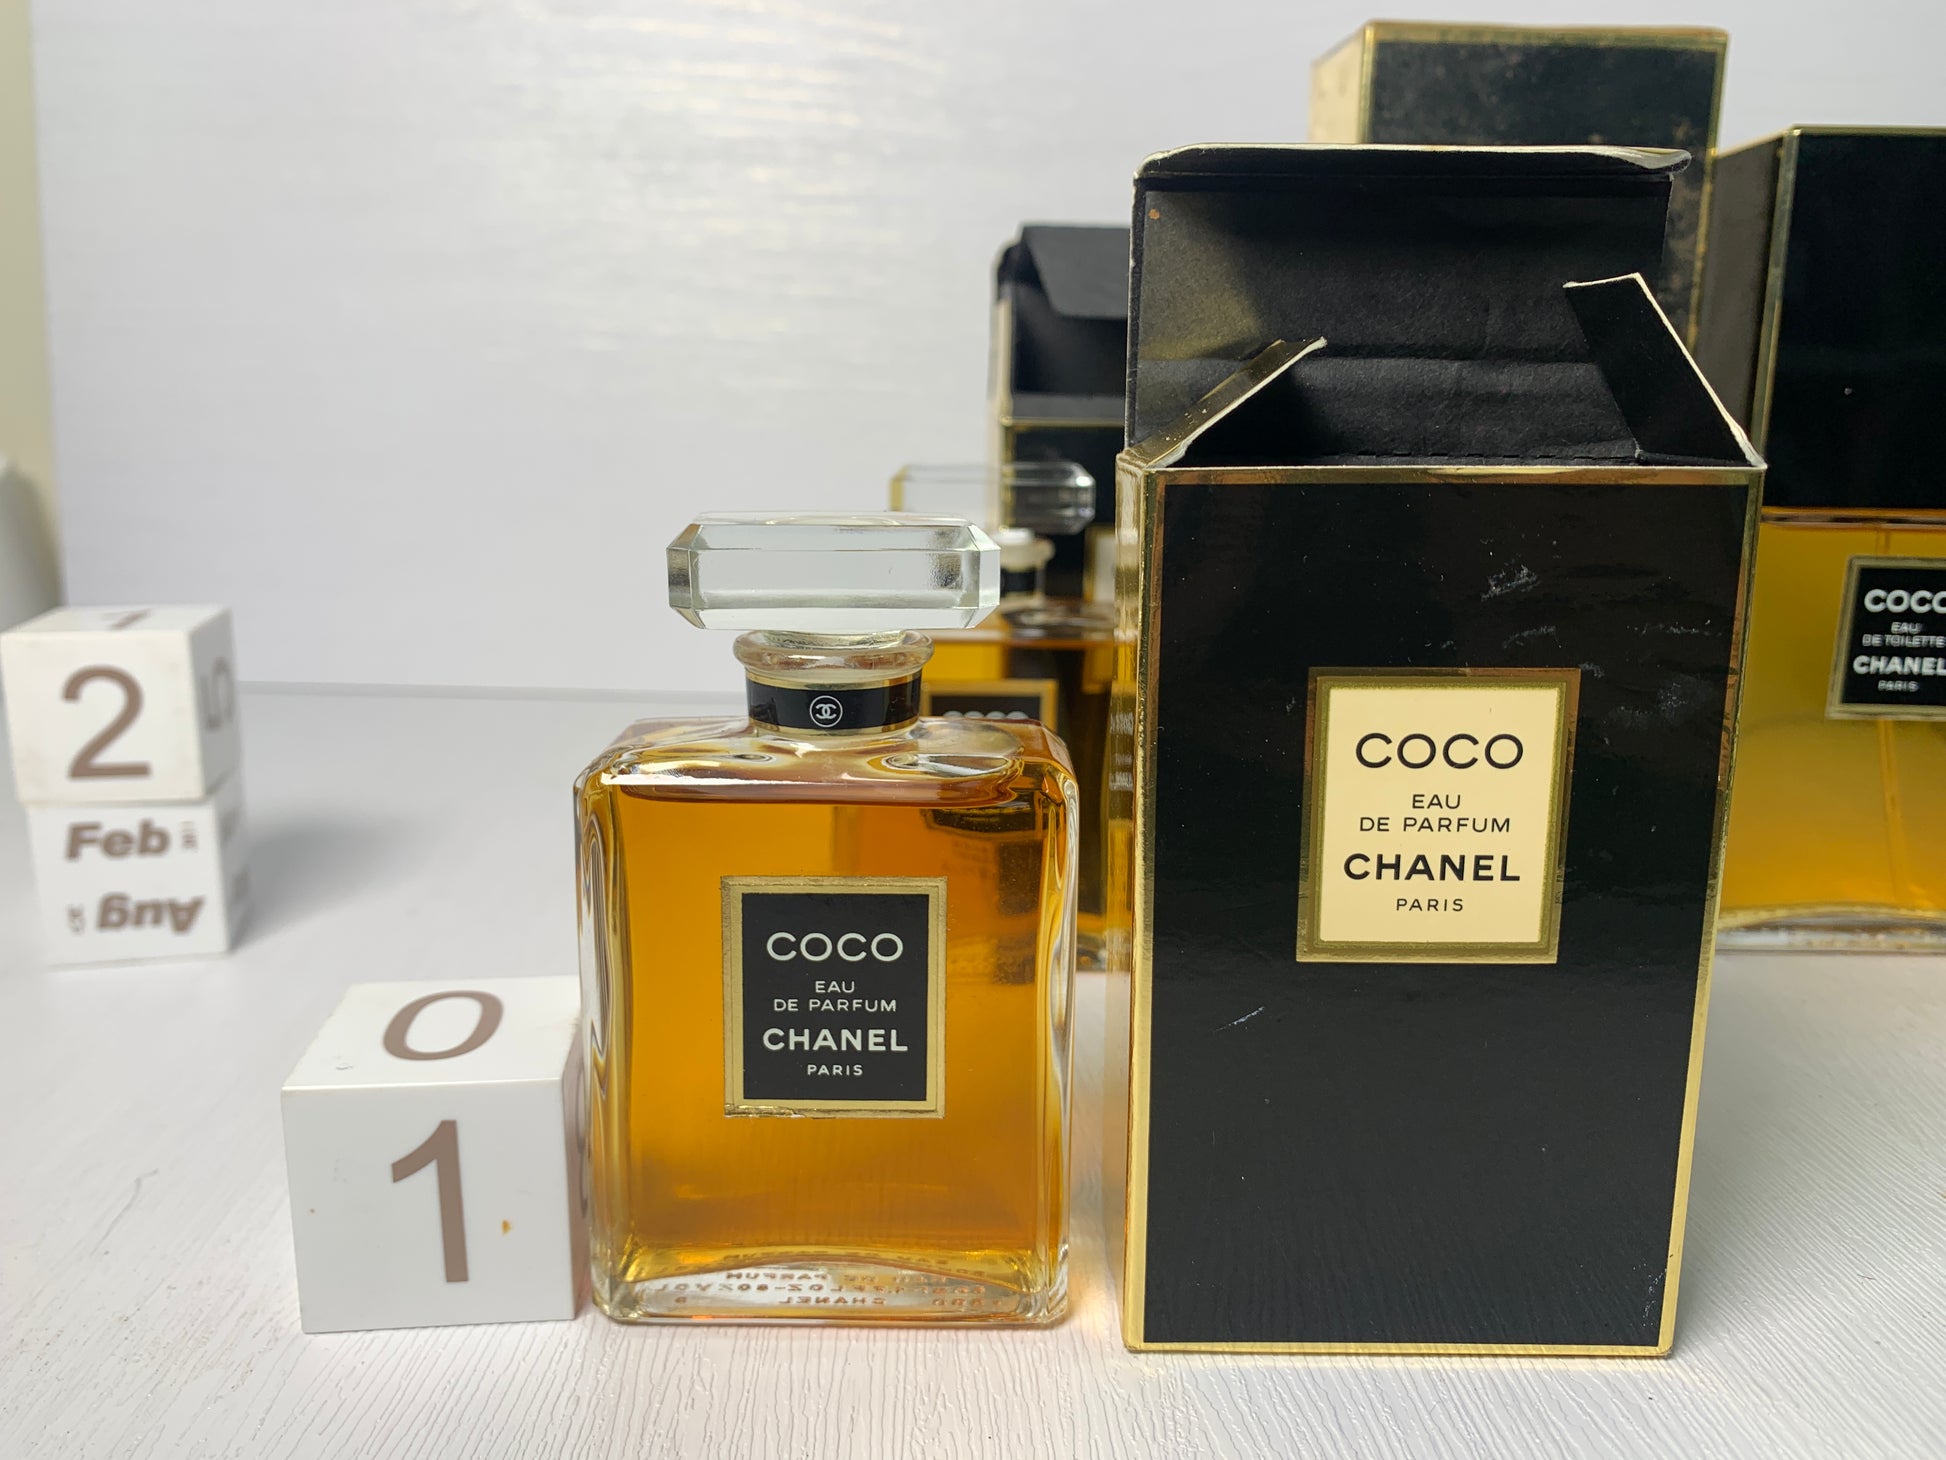 COCO Eau de Parfum - CHANEL